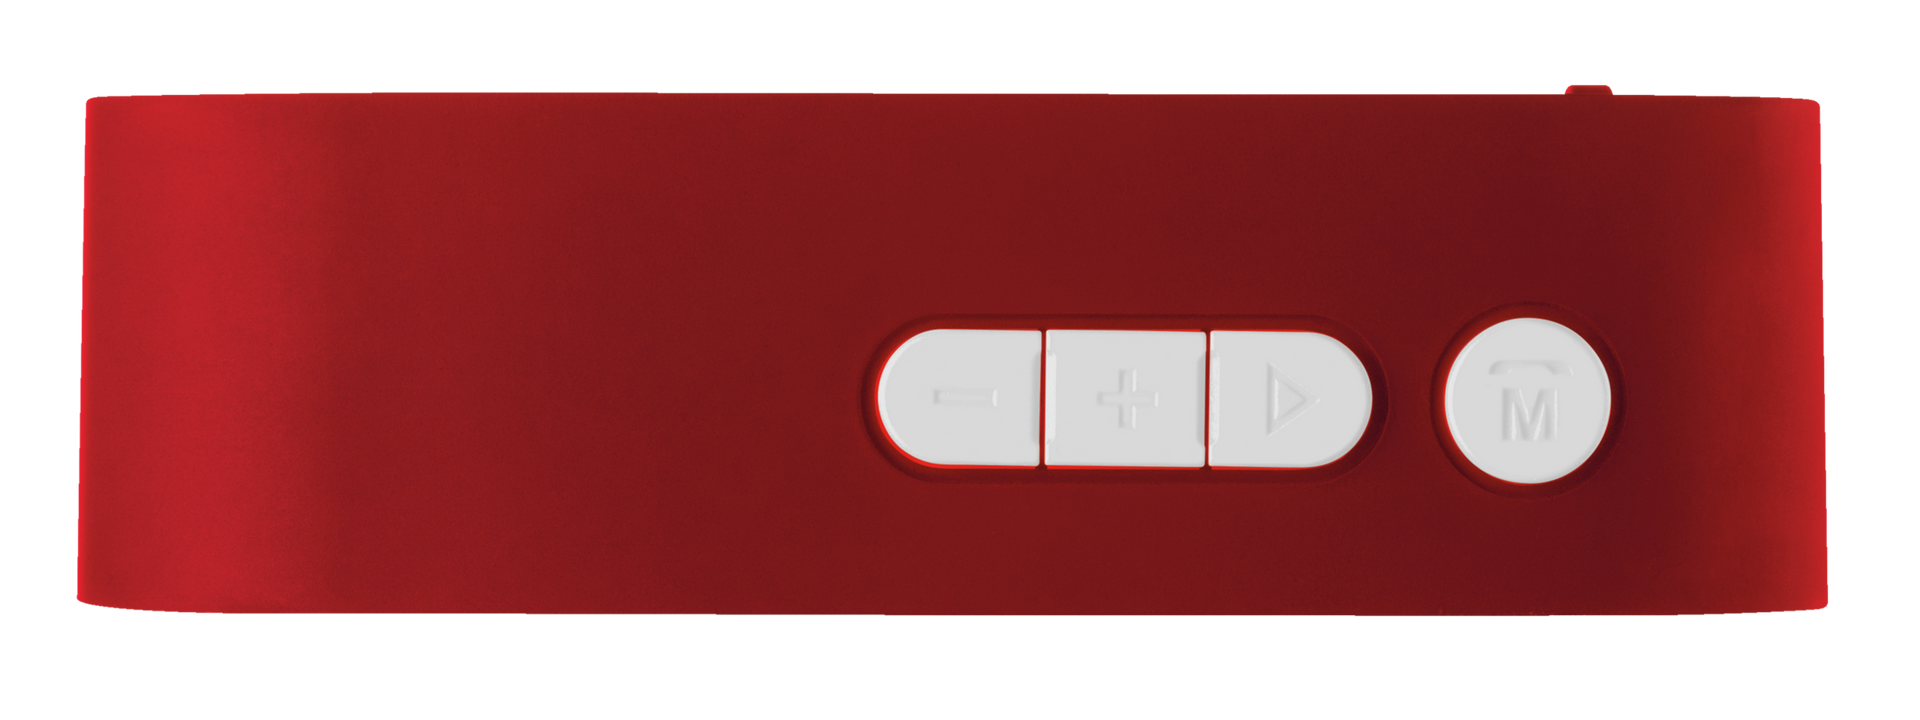 Tunebox Bluetooth Wireless Speaker - red-Top